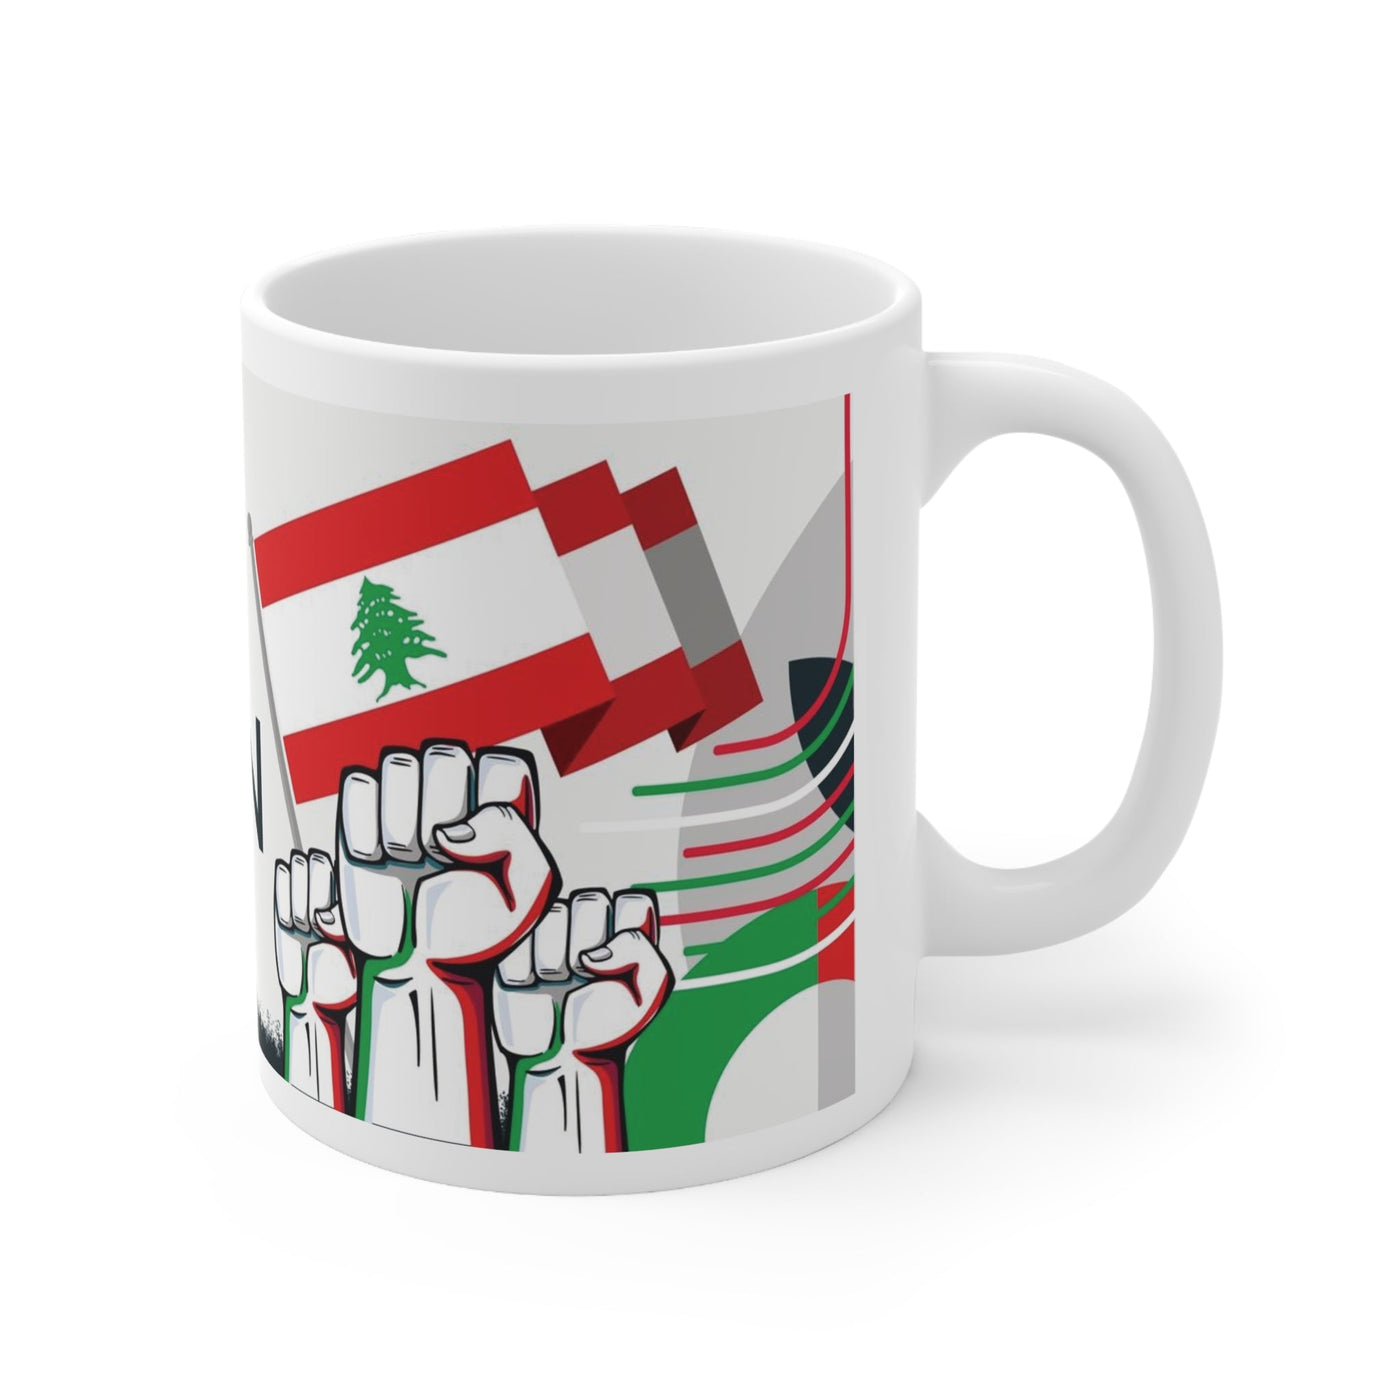 Lebanon Coffee Mug - Ezra's Clothing